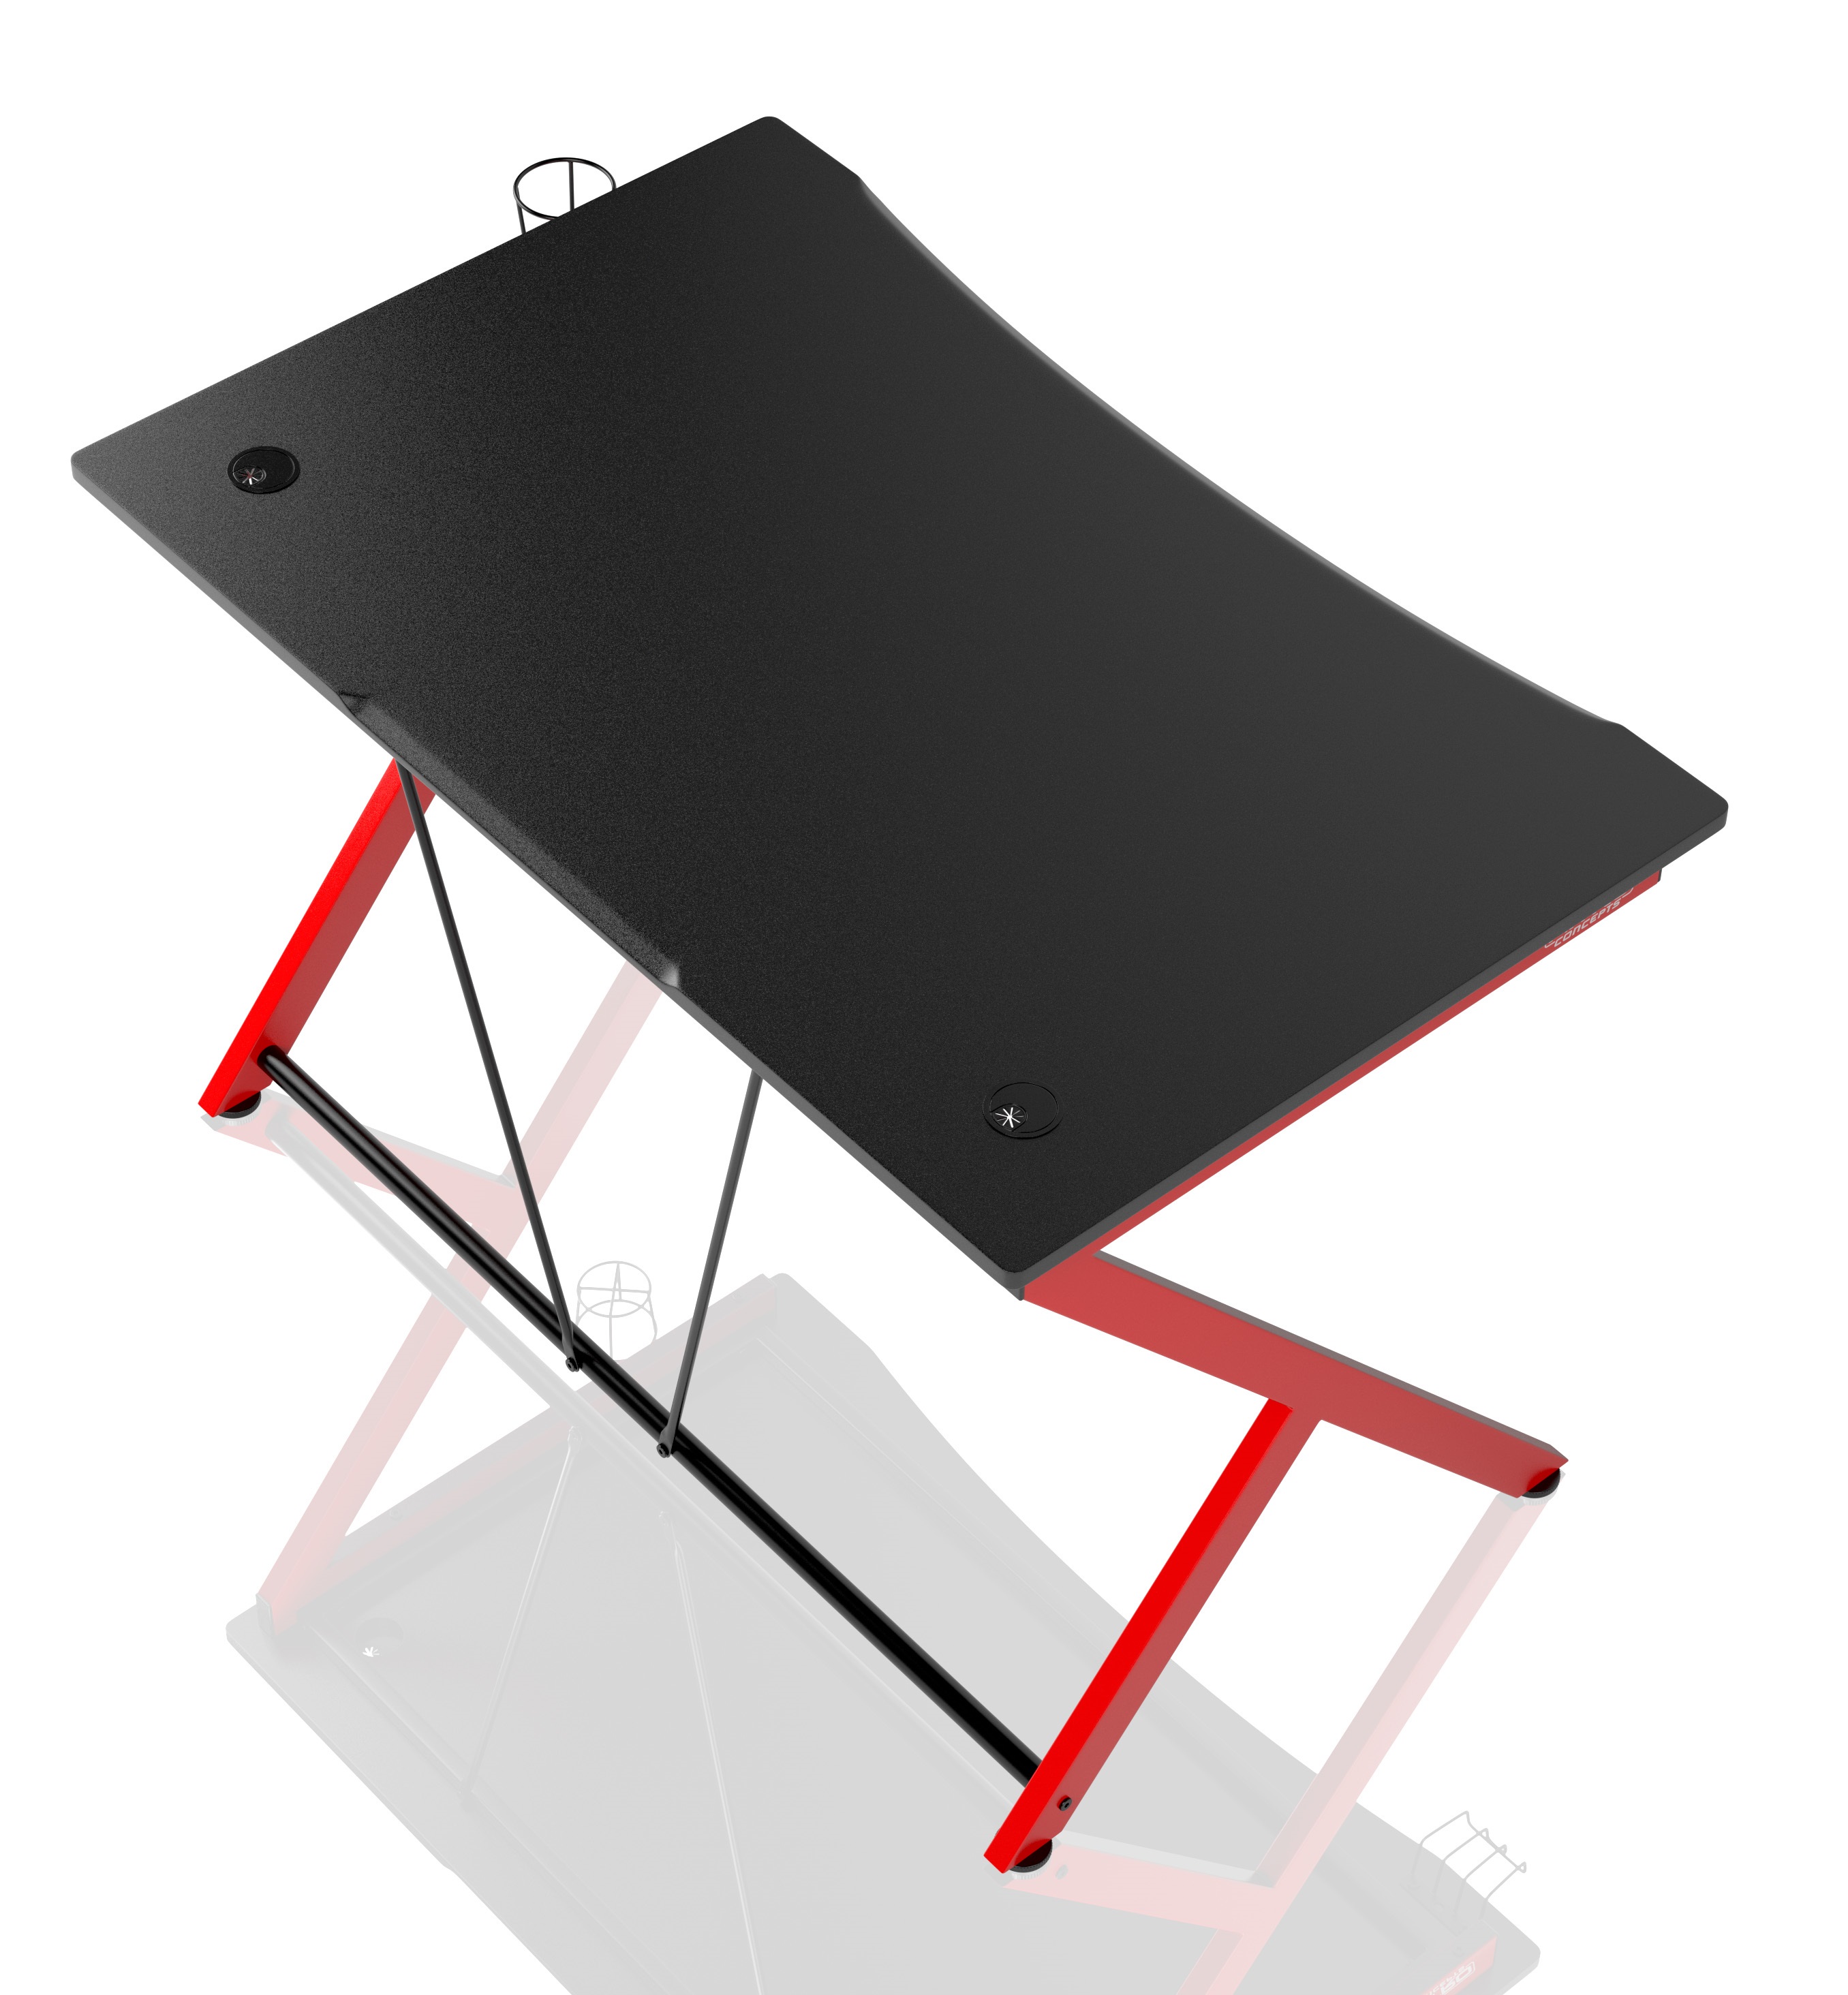 Nitro Concepts - Nitro Concepts D12 Gaming Desk - Black/Red